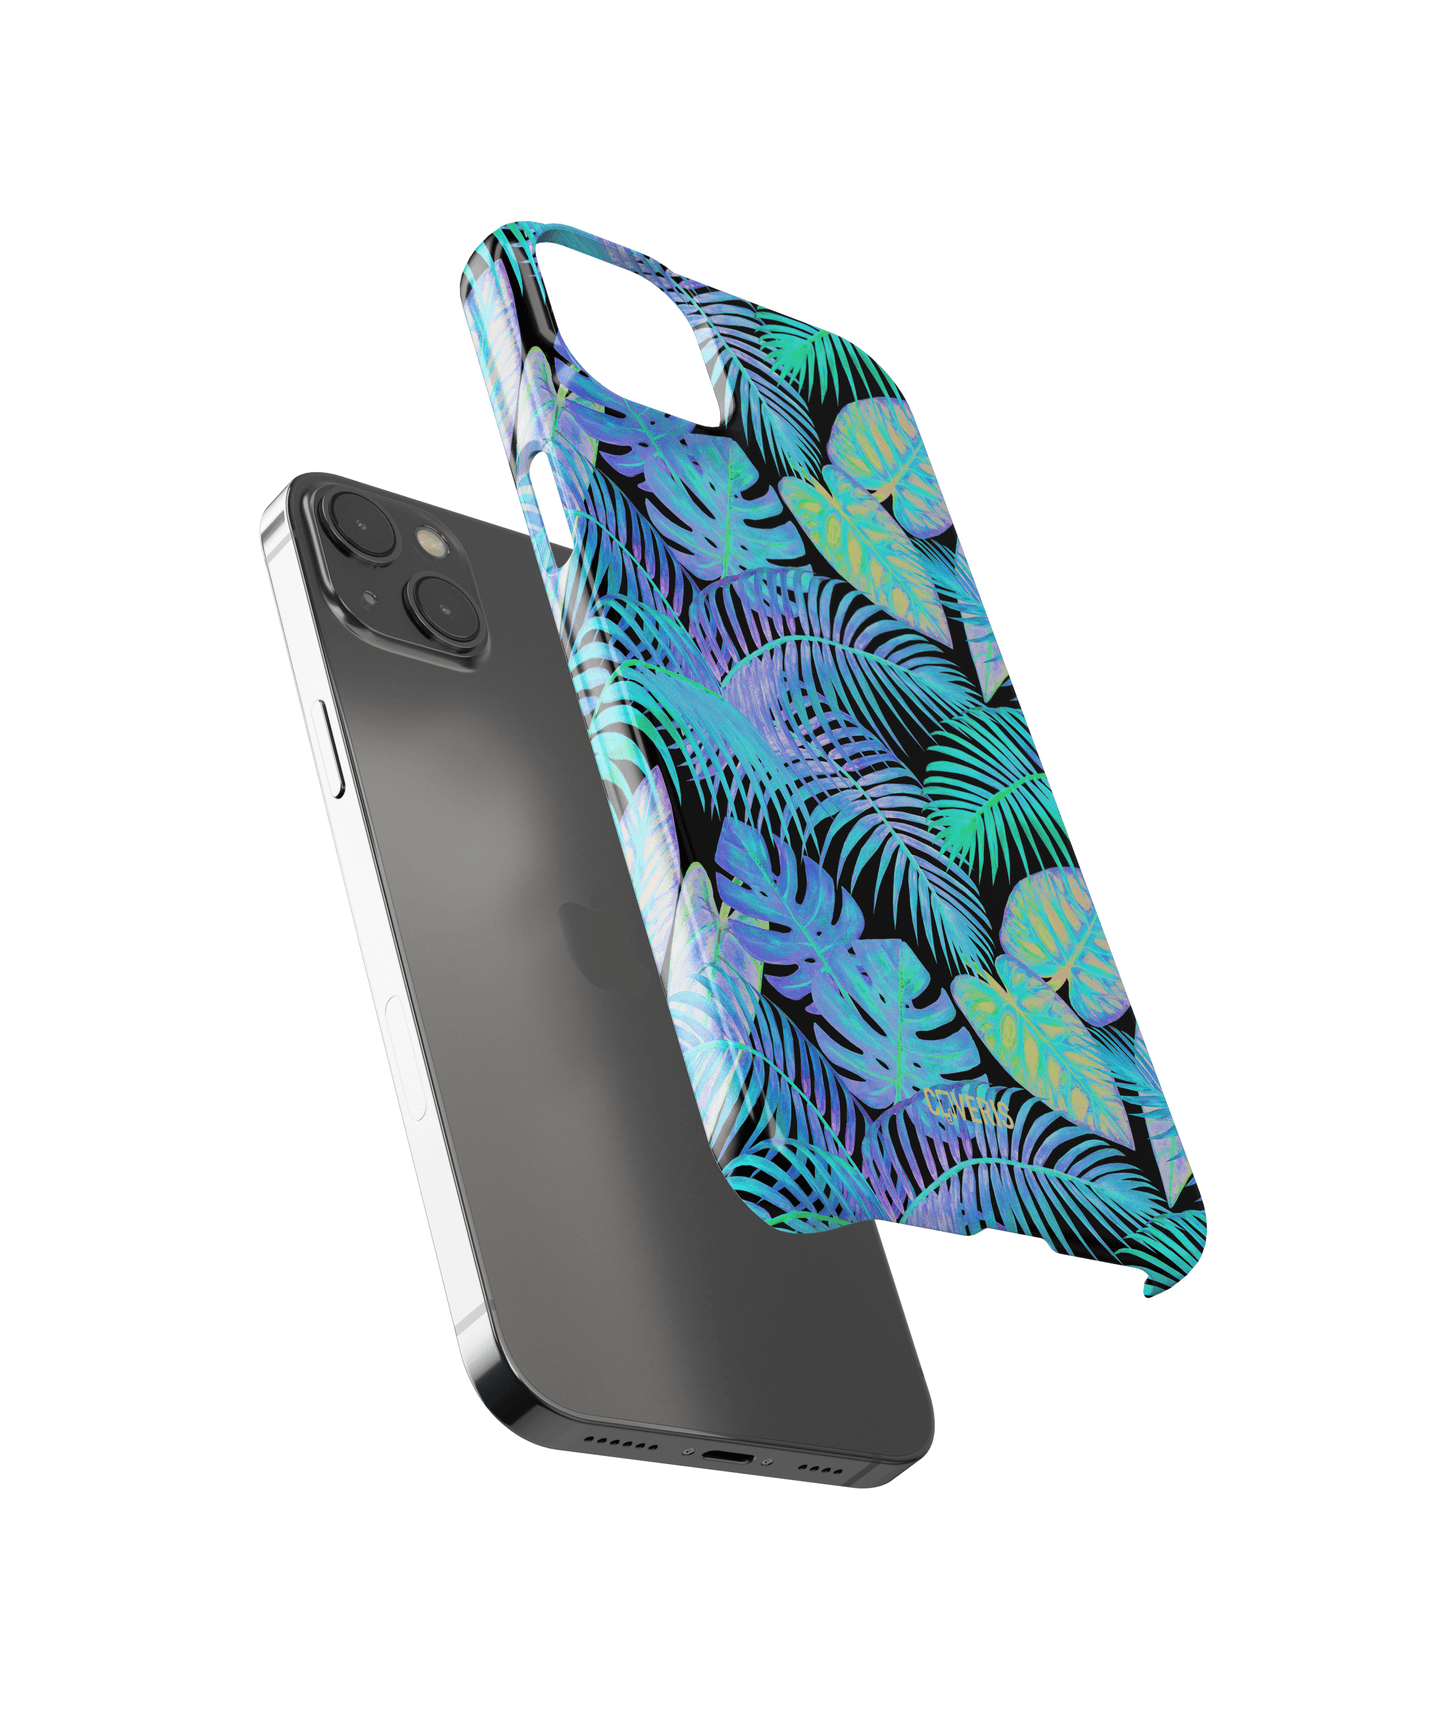 Tropic - iPhone 6 / 6s phone case